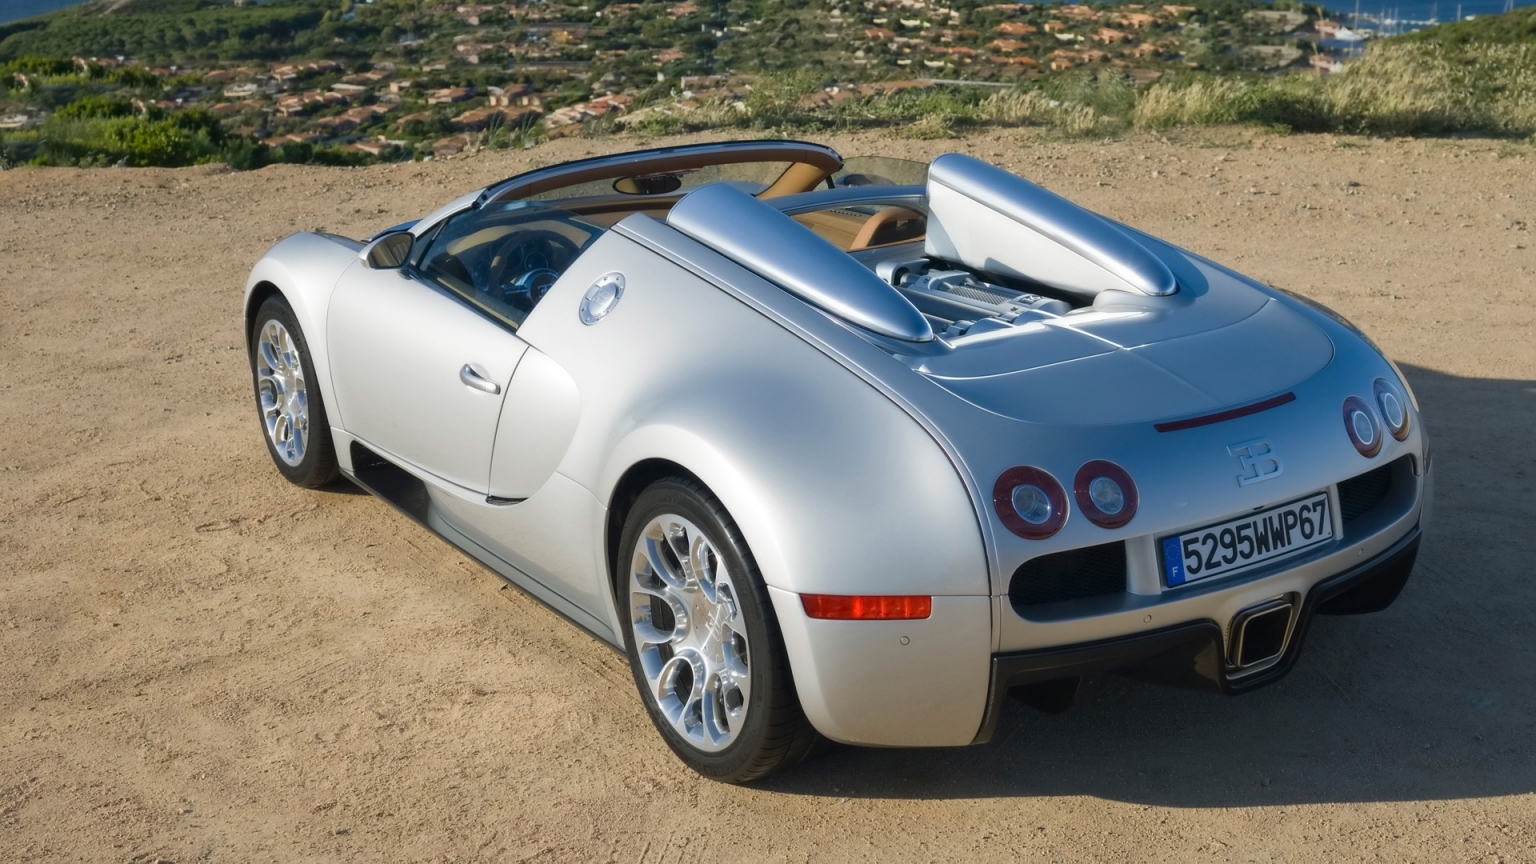 Bugatti Veyron 16.4 Grand Sport in Sardinia 2010 - Rear Angle for 1536 x 864 HDTV resolution